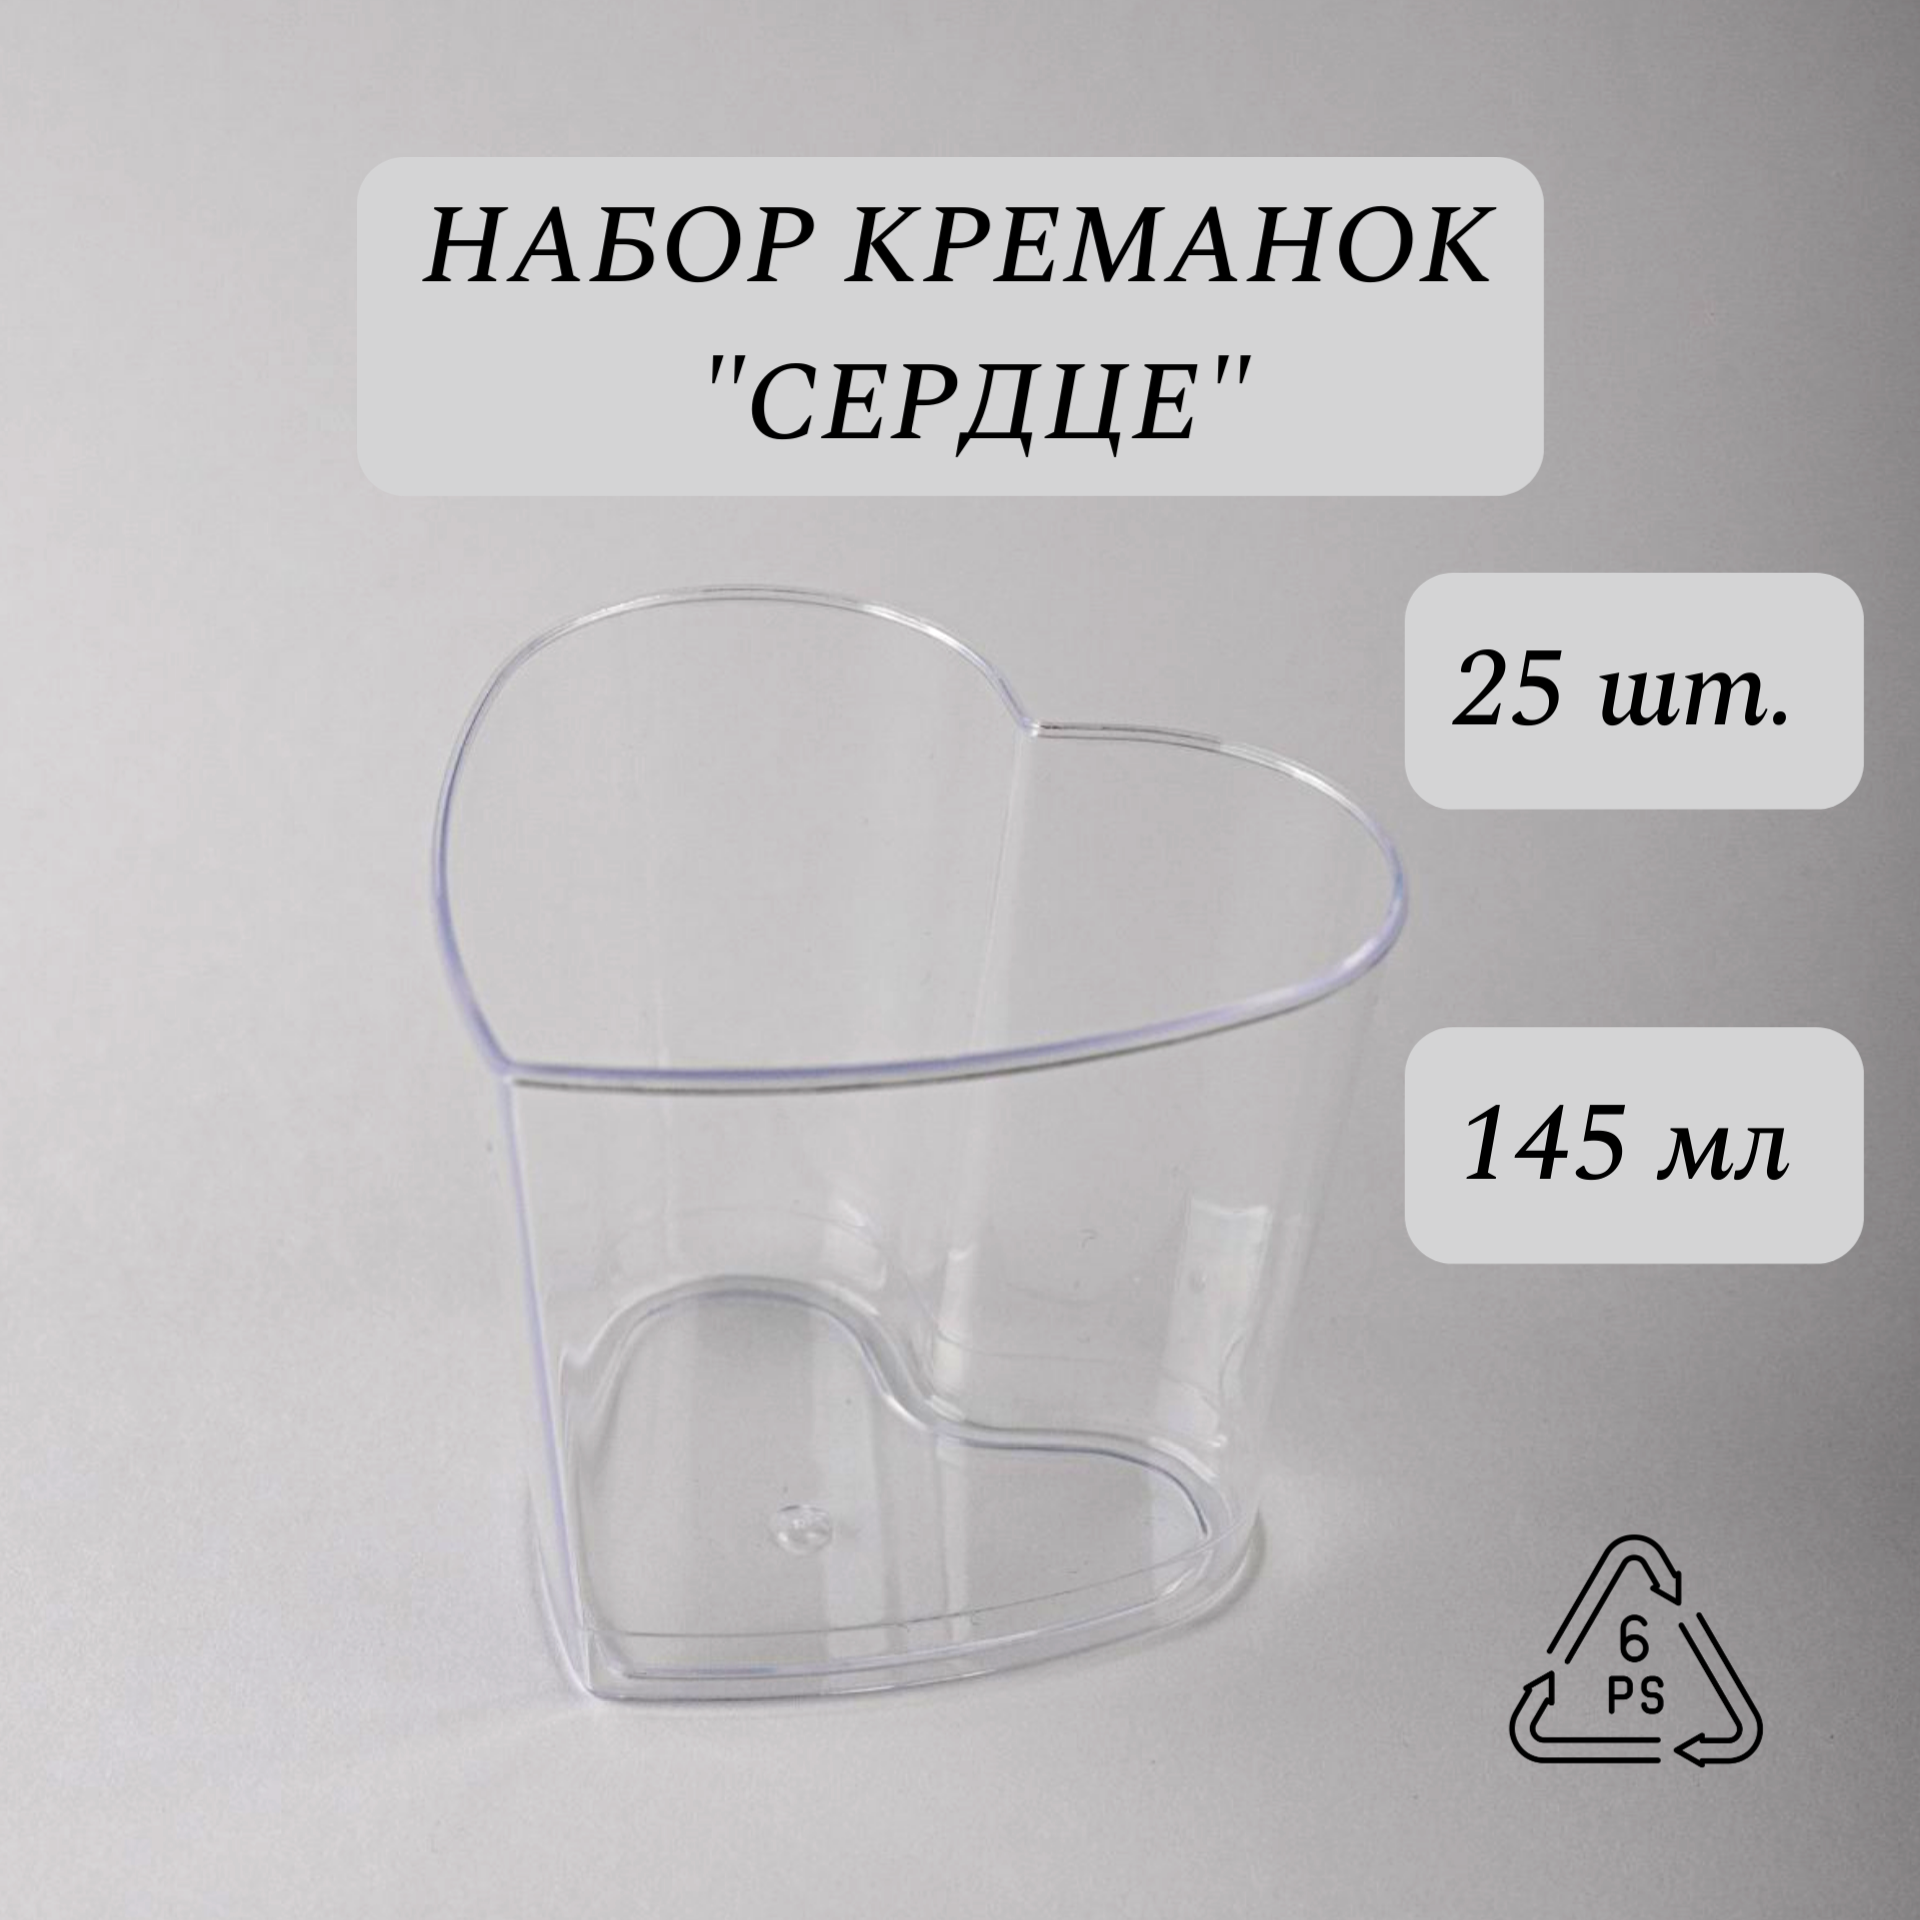 Форма для фуршетов, креманка Сердце, 145 мл, 25 шт, размер 55х60х70 мм, полистирол литьевой (PS), прозрачный пластик